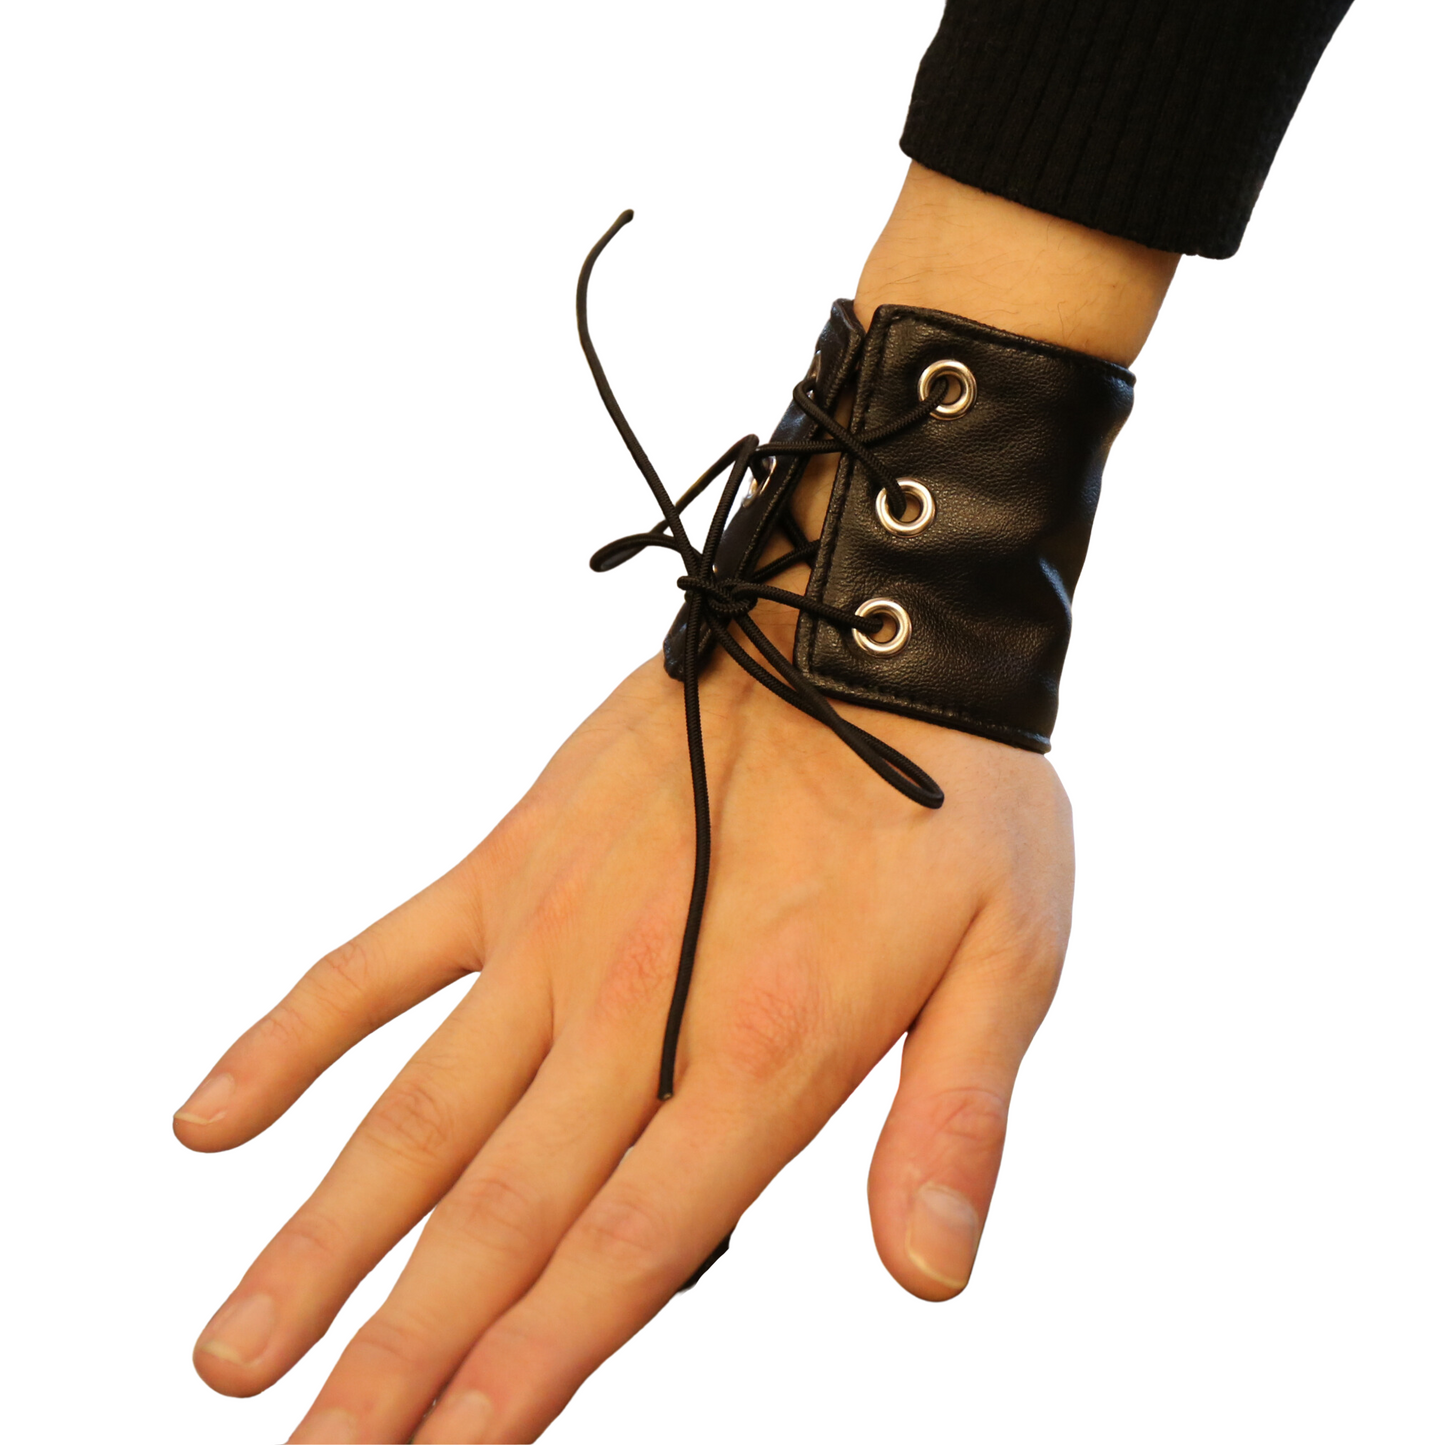 The VM Lace-Up Wrist Cuff